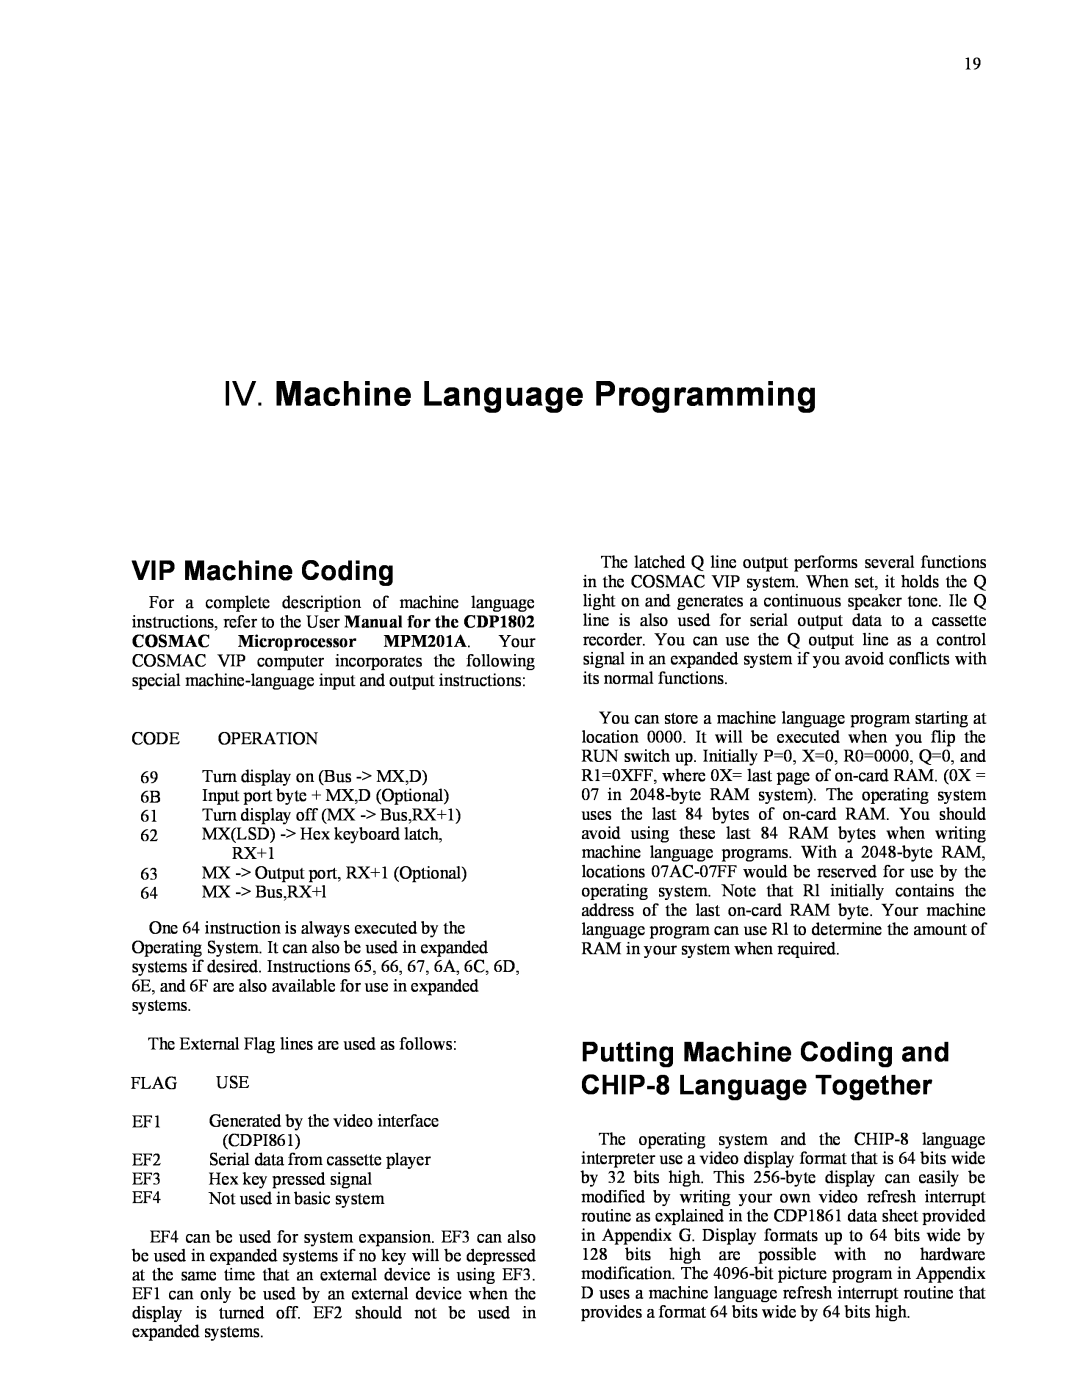 RCA CDP18S711 manual IV. Machine Language Programming, VIP Machine Coding 